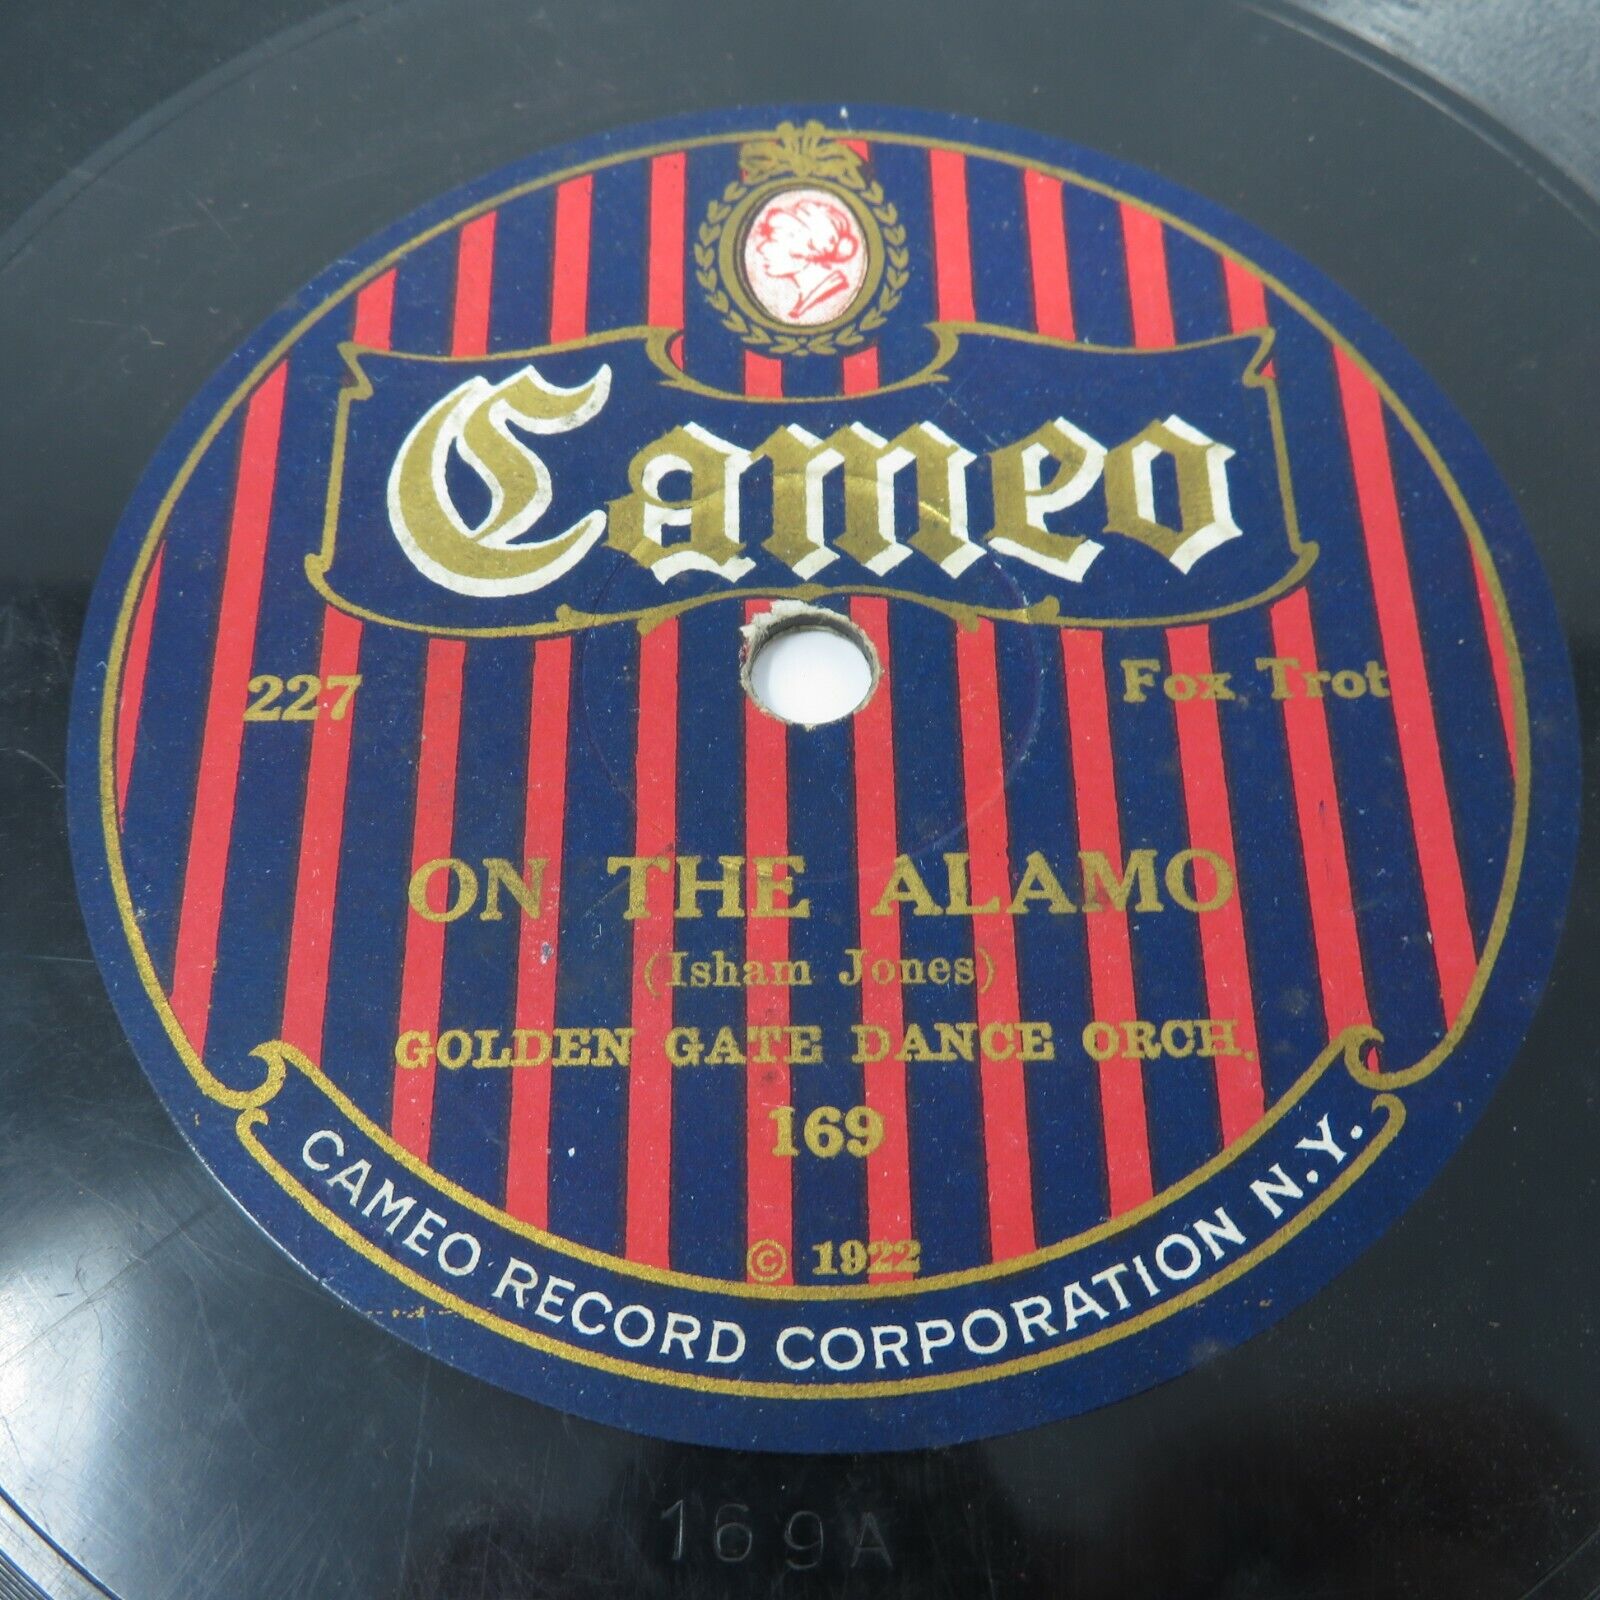 Vintage Golden Gate Dance - On the Alamo 1922 Vinyl Record Cameo 169